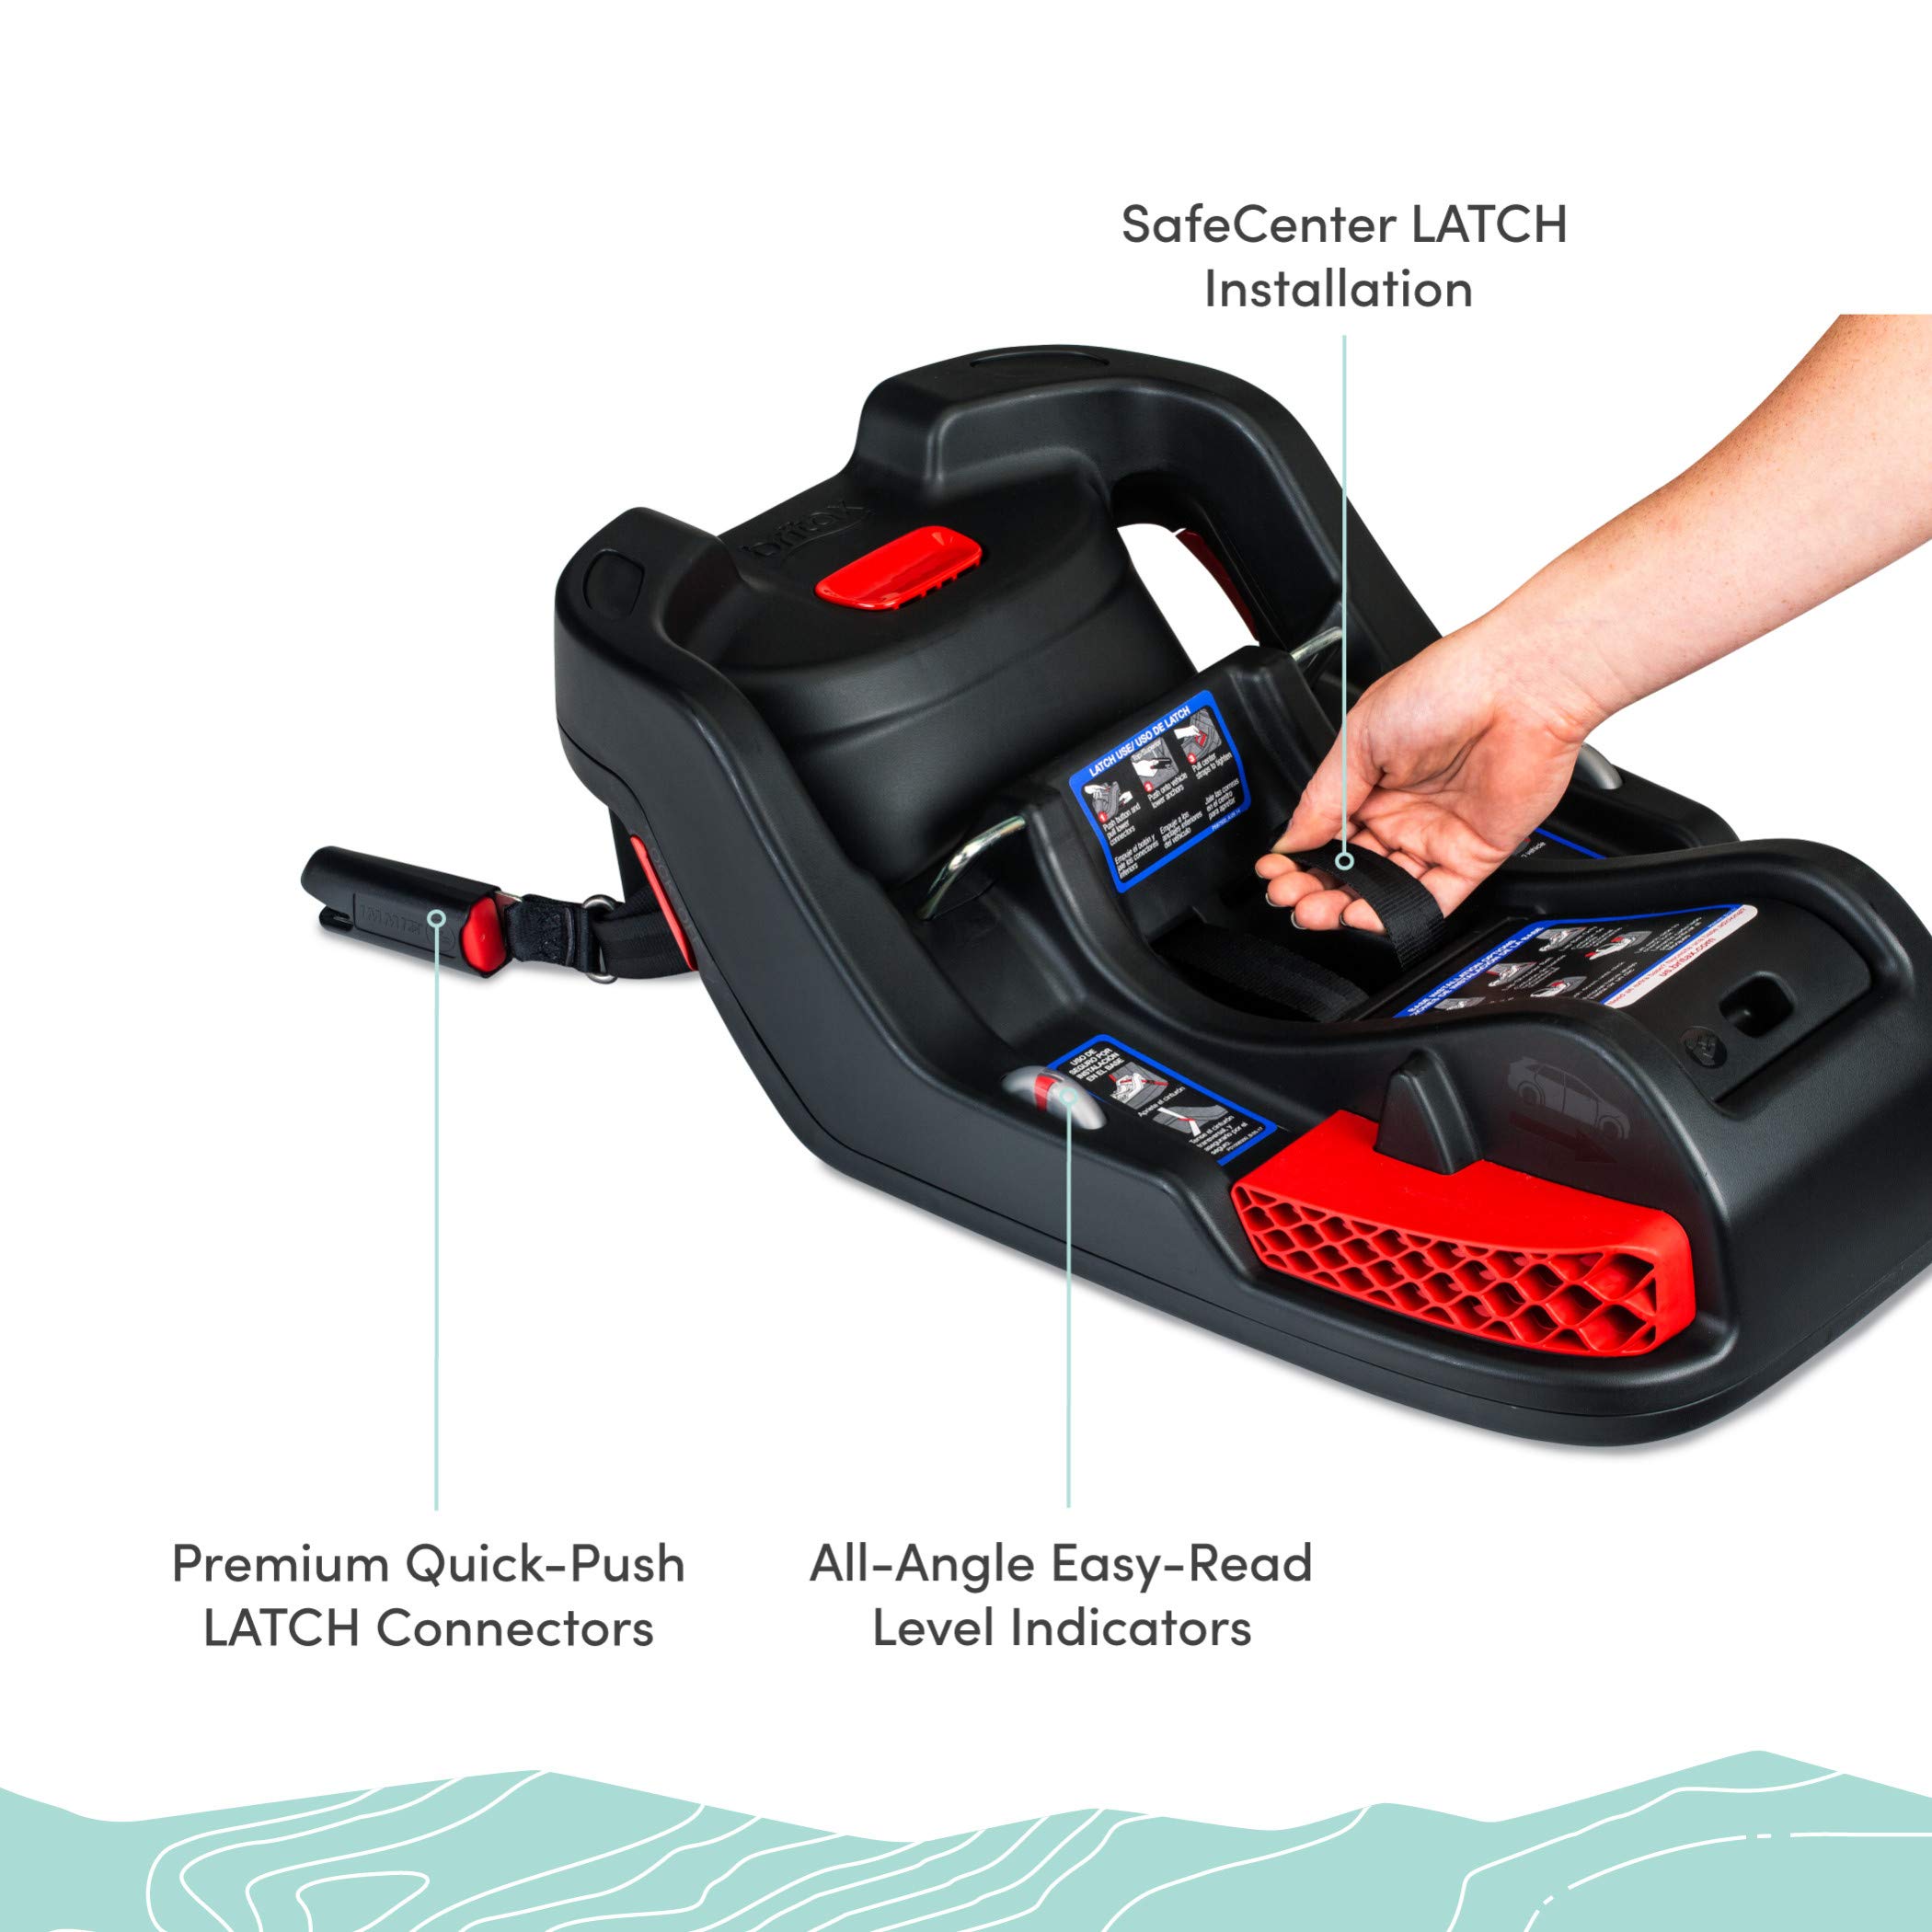 BOB Revolution Flex 3.0 Travel System with B-Safe Gen2 Infant Car Seat Graphite Black